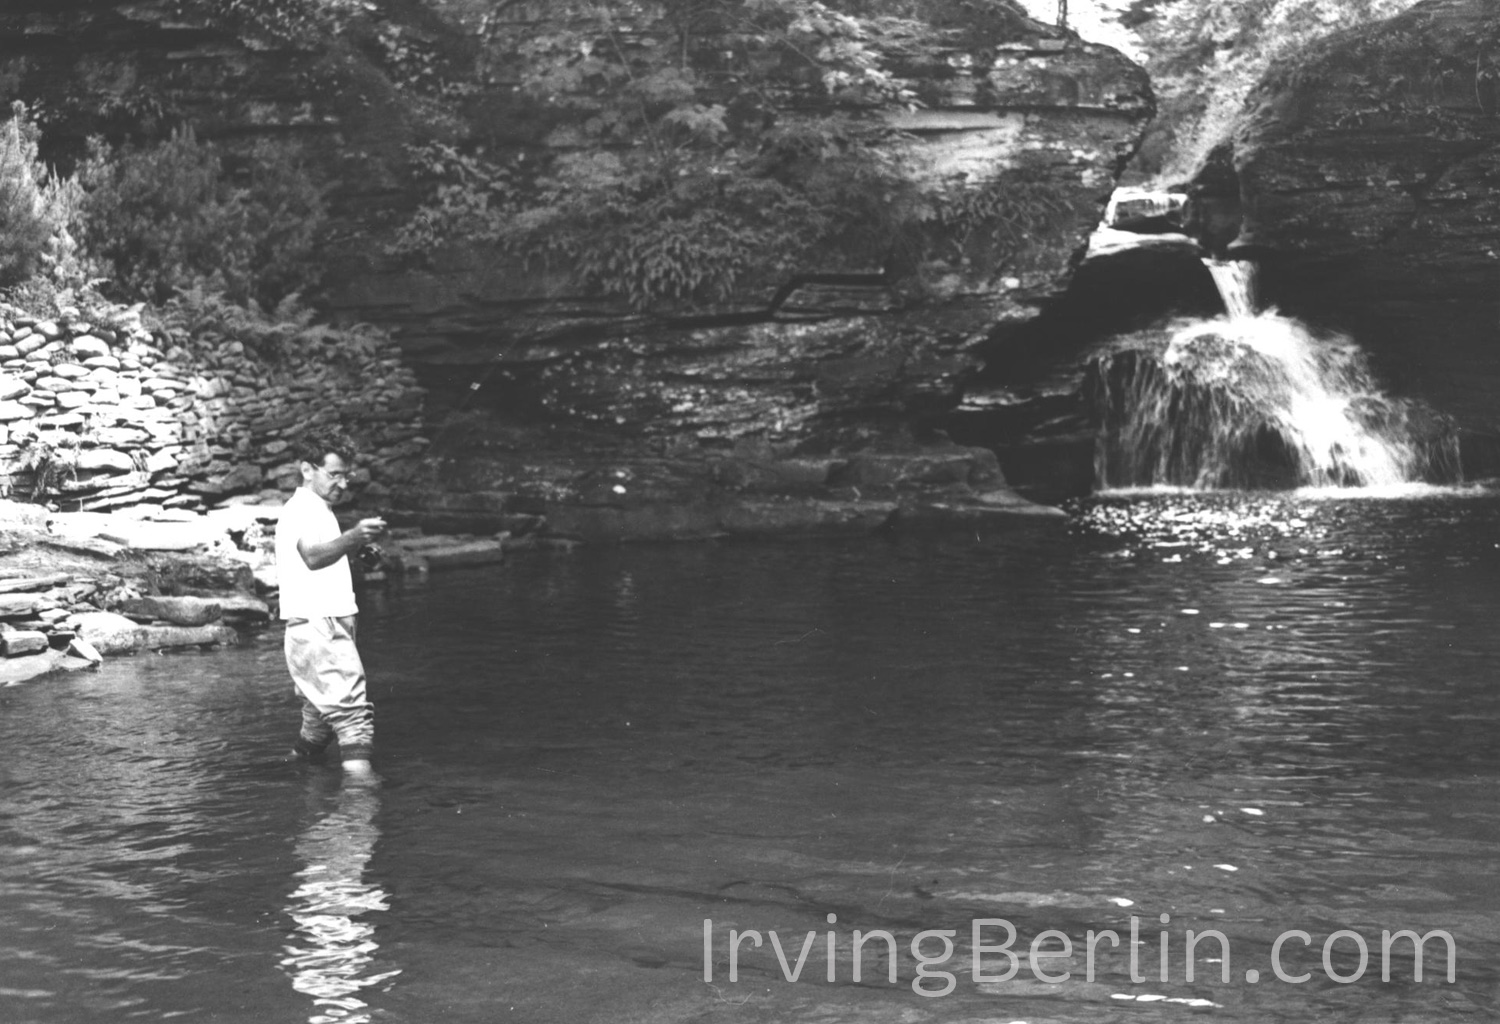 Irving-Berlin-fishing.jpg